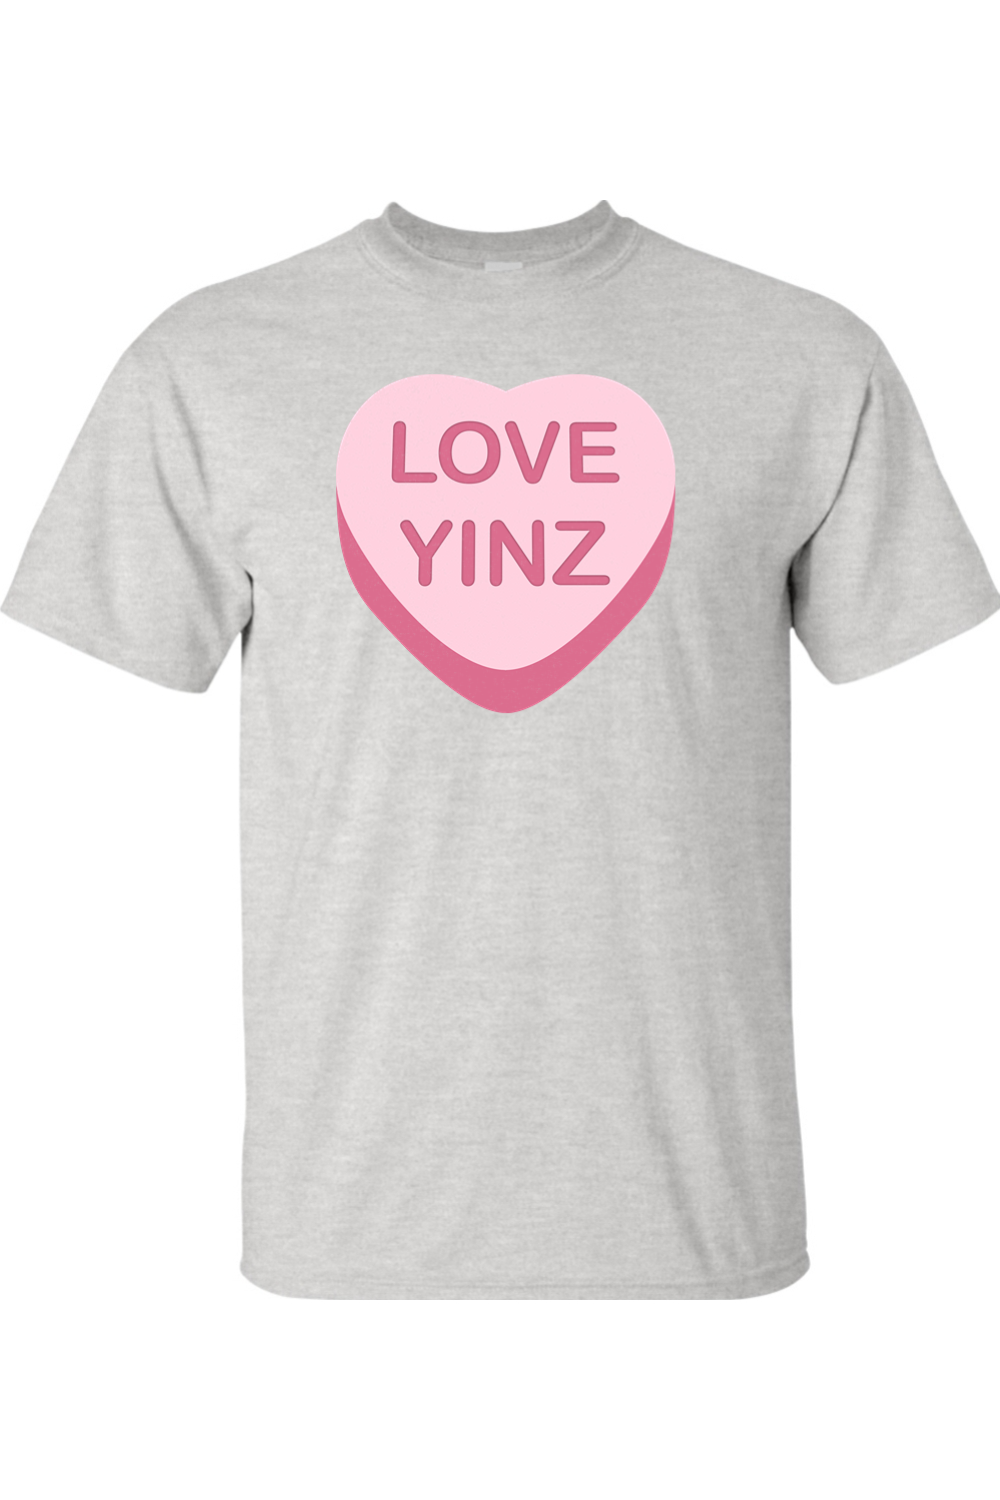 Love Yinz - Conversation Heart - 4XL & 5XL - Yinzylvania